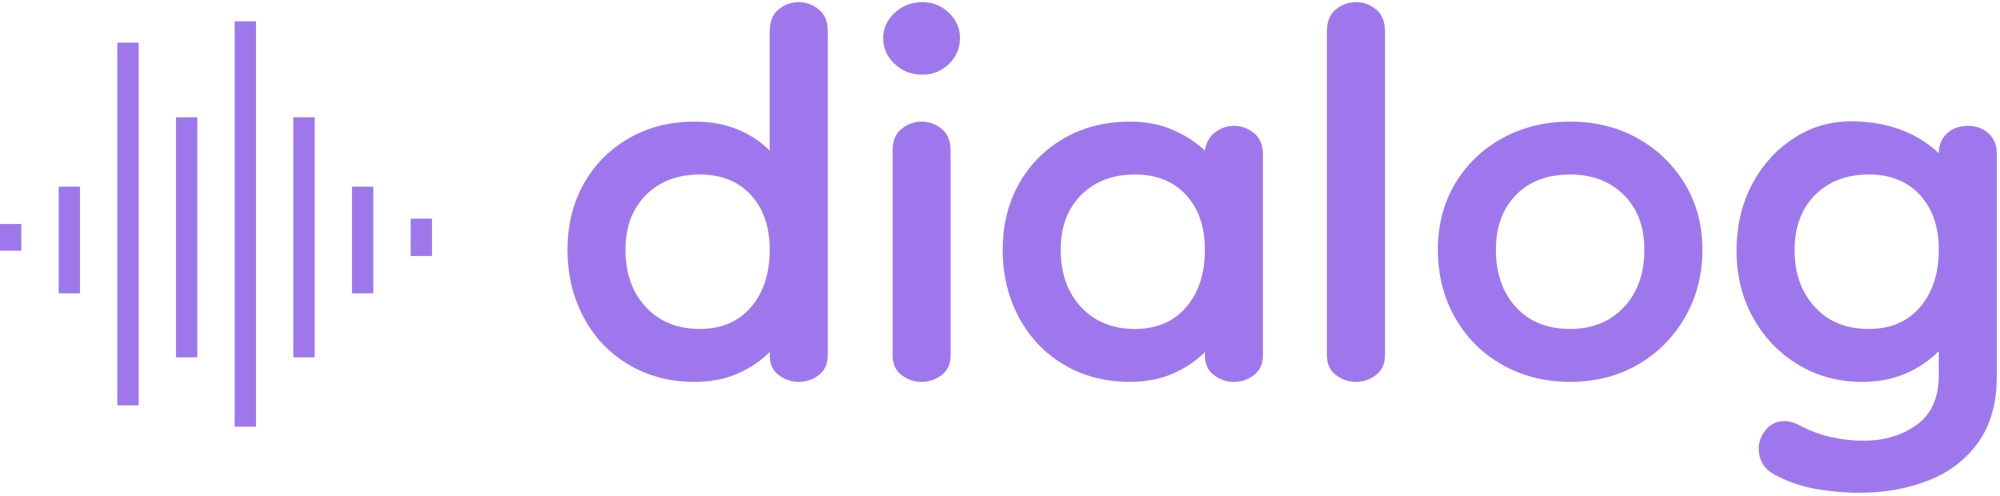 dialog_logo_inverted_text_purple